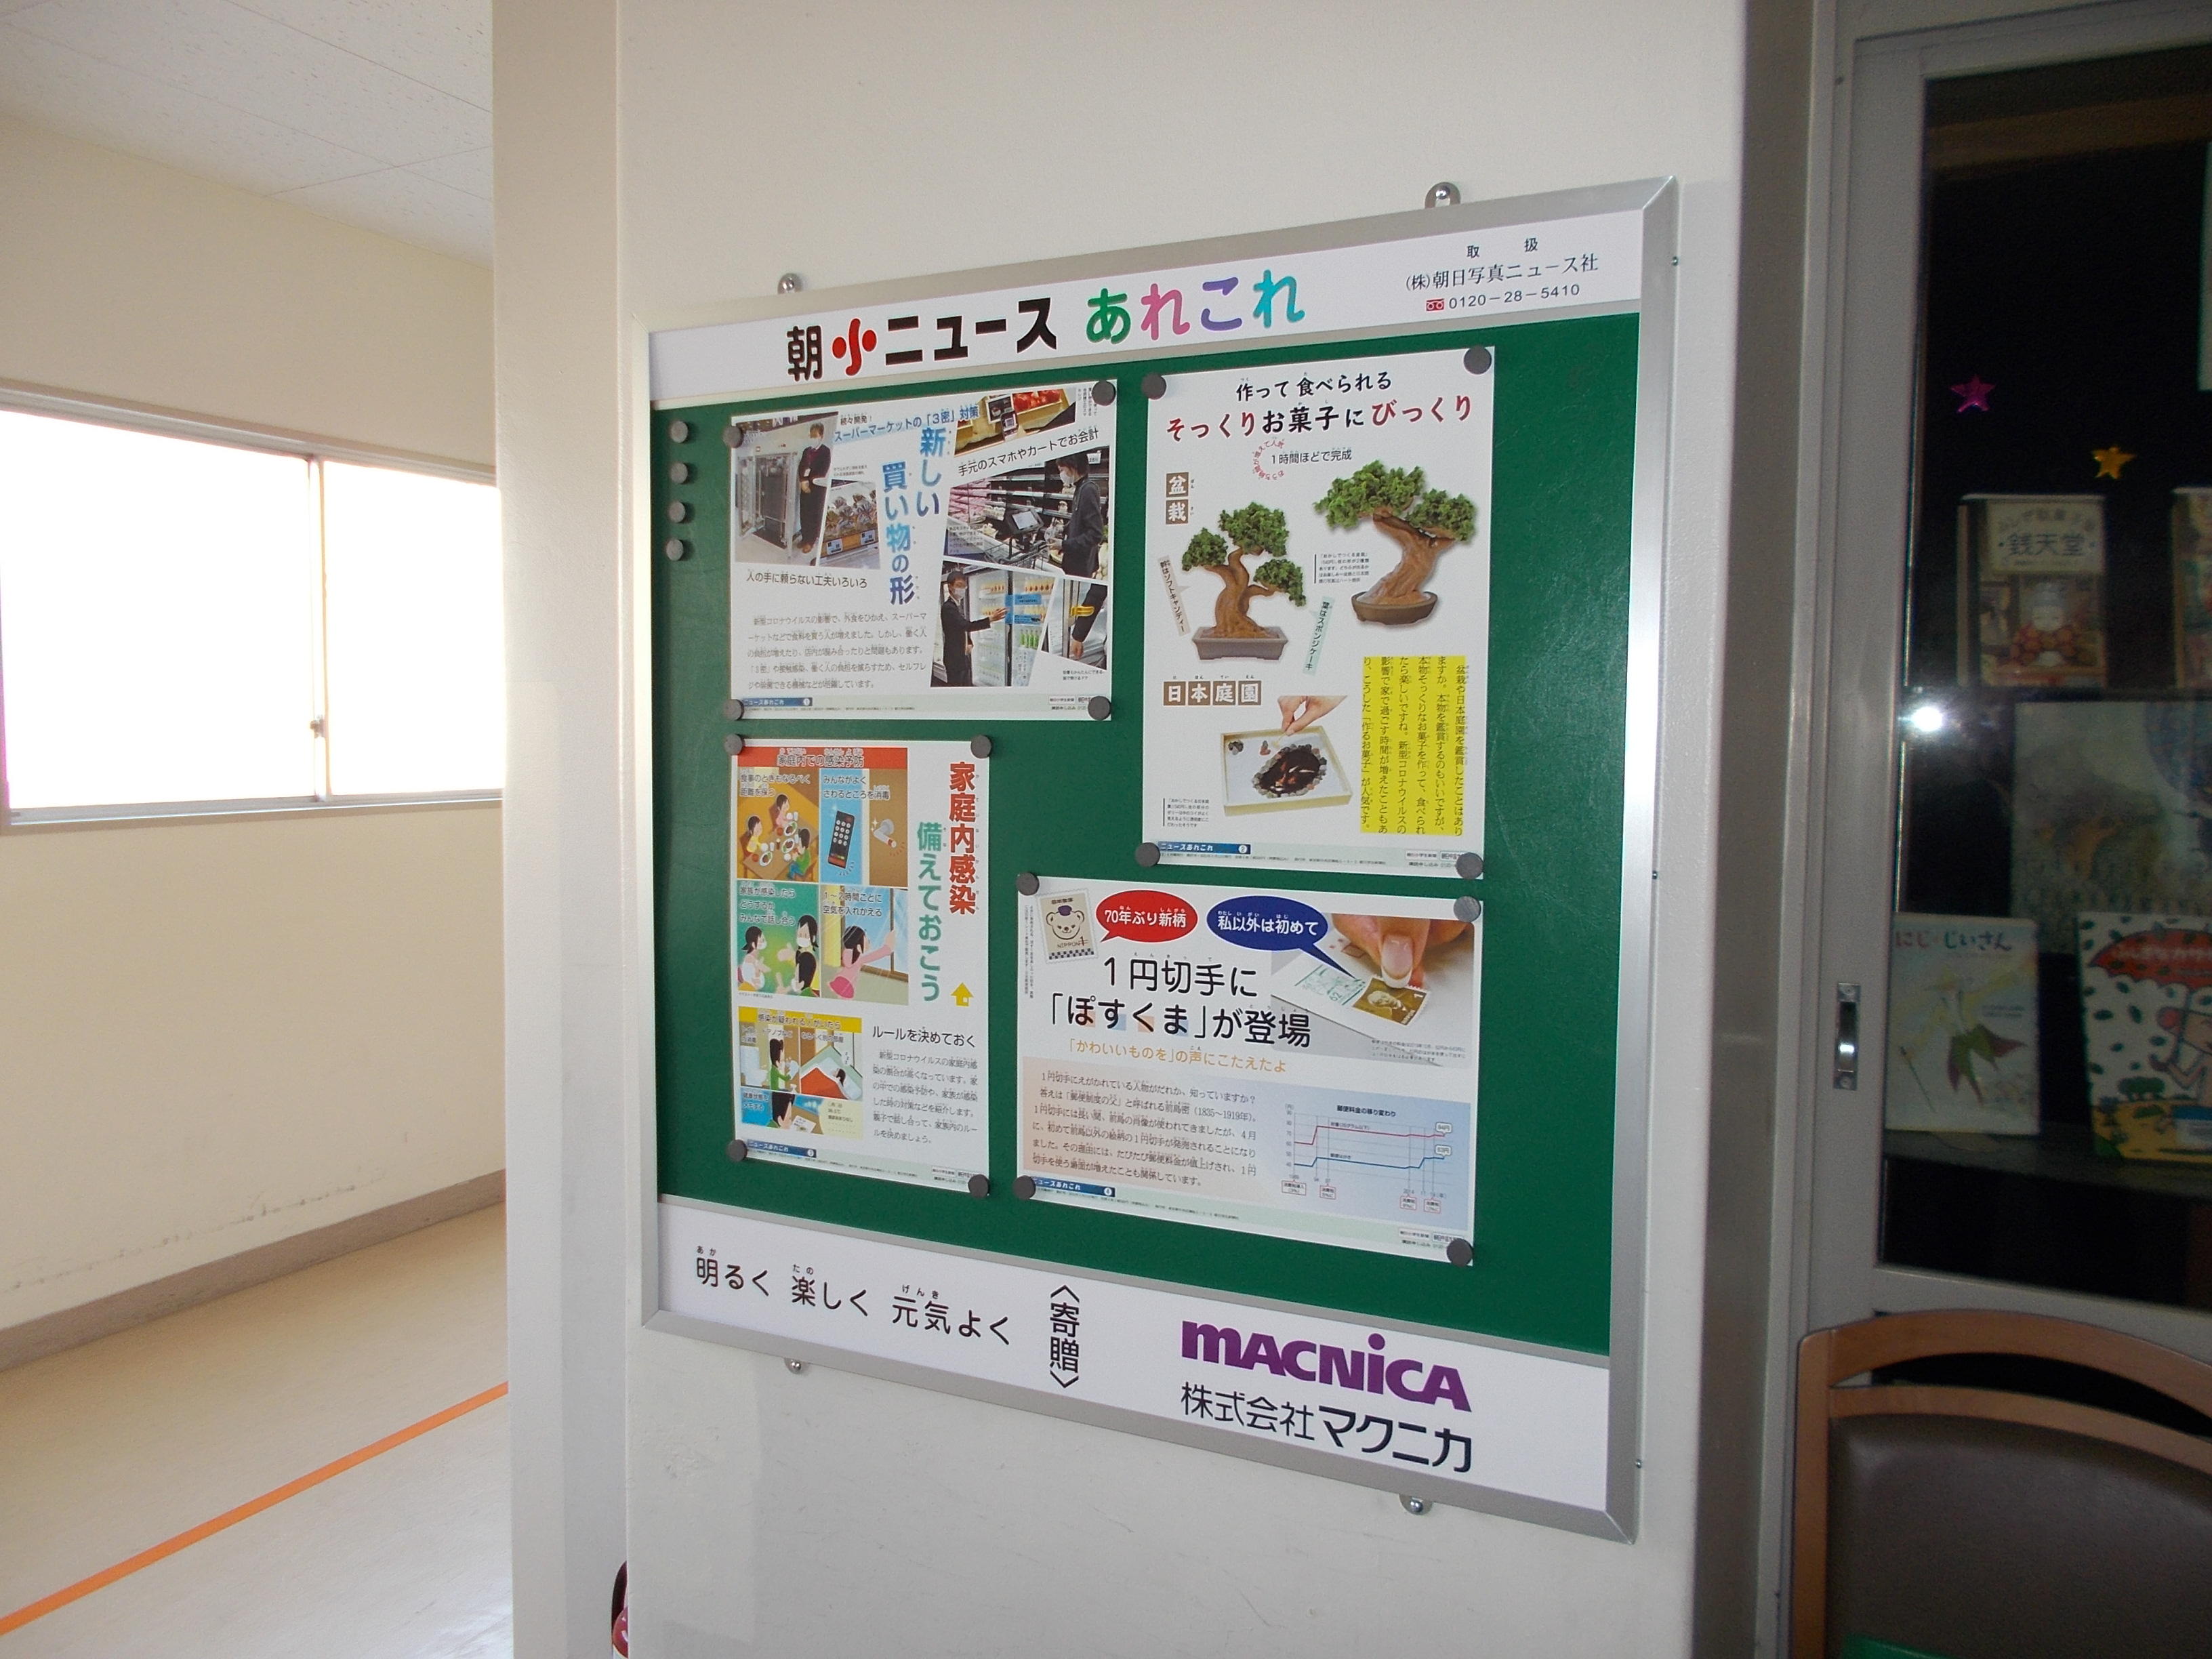 Donating a bulletin board to Shinohara Elementary School